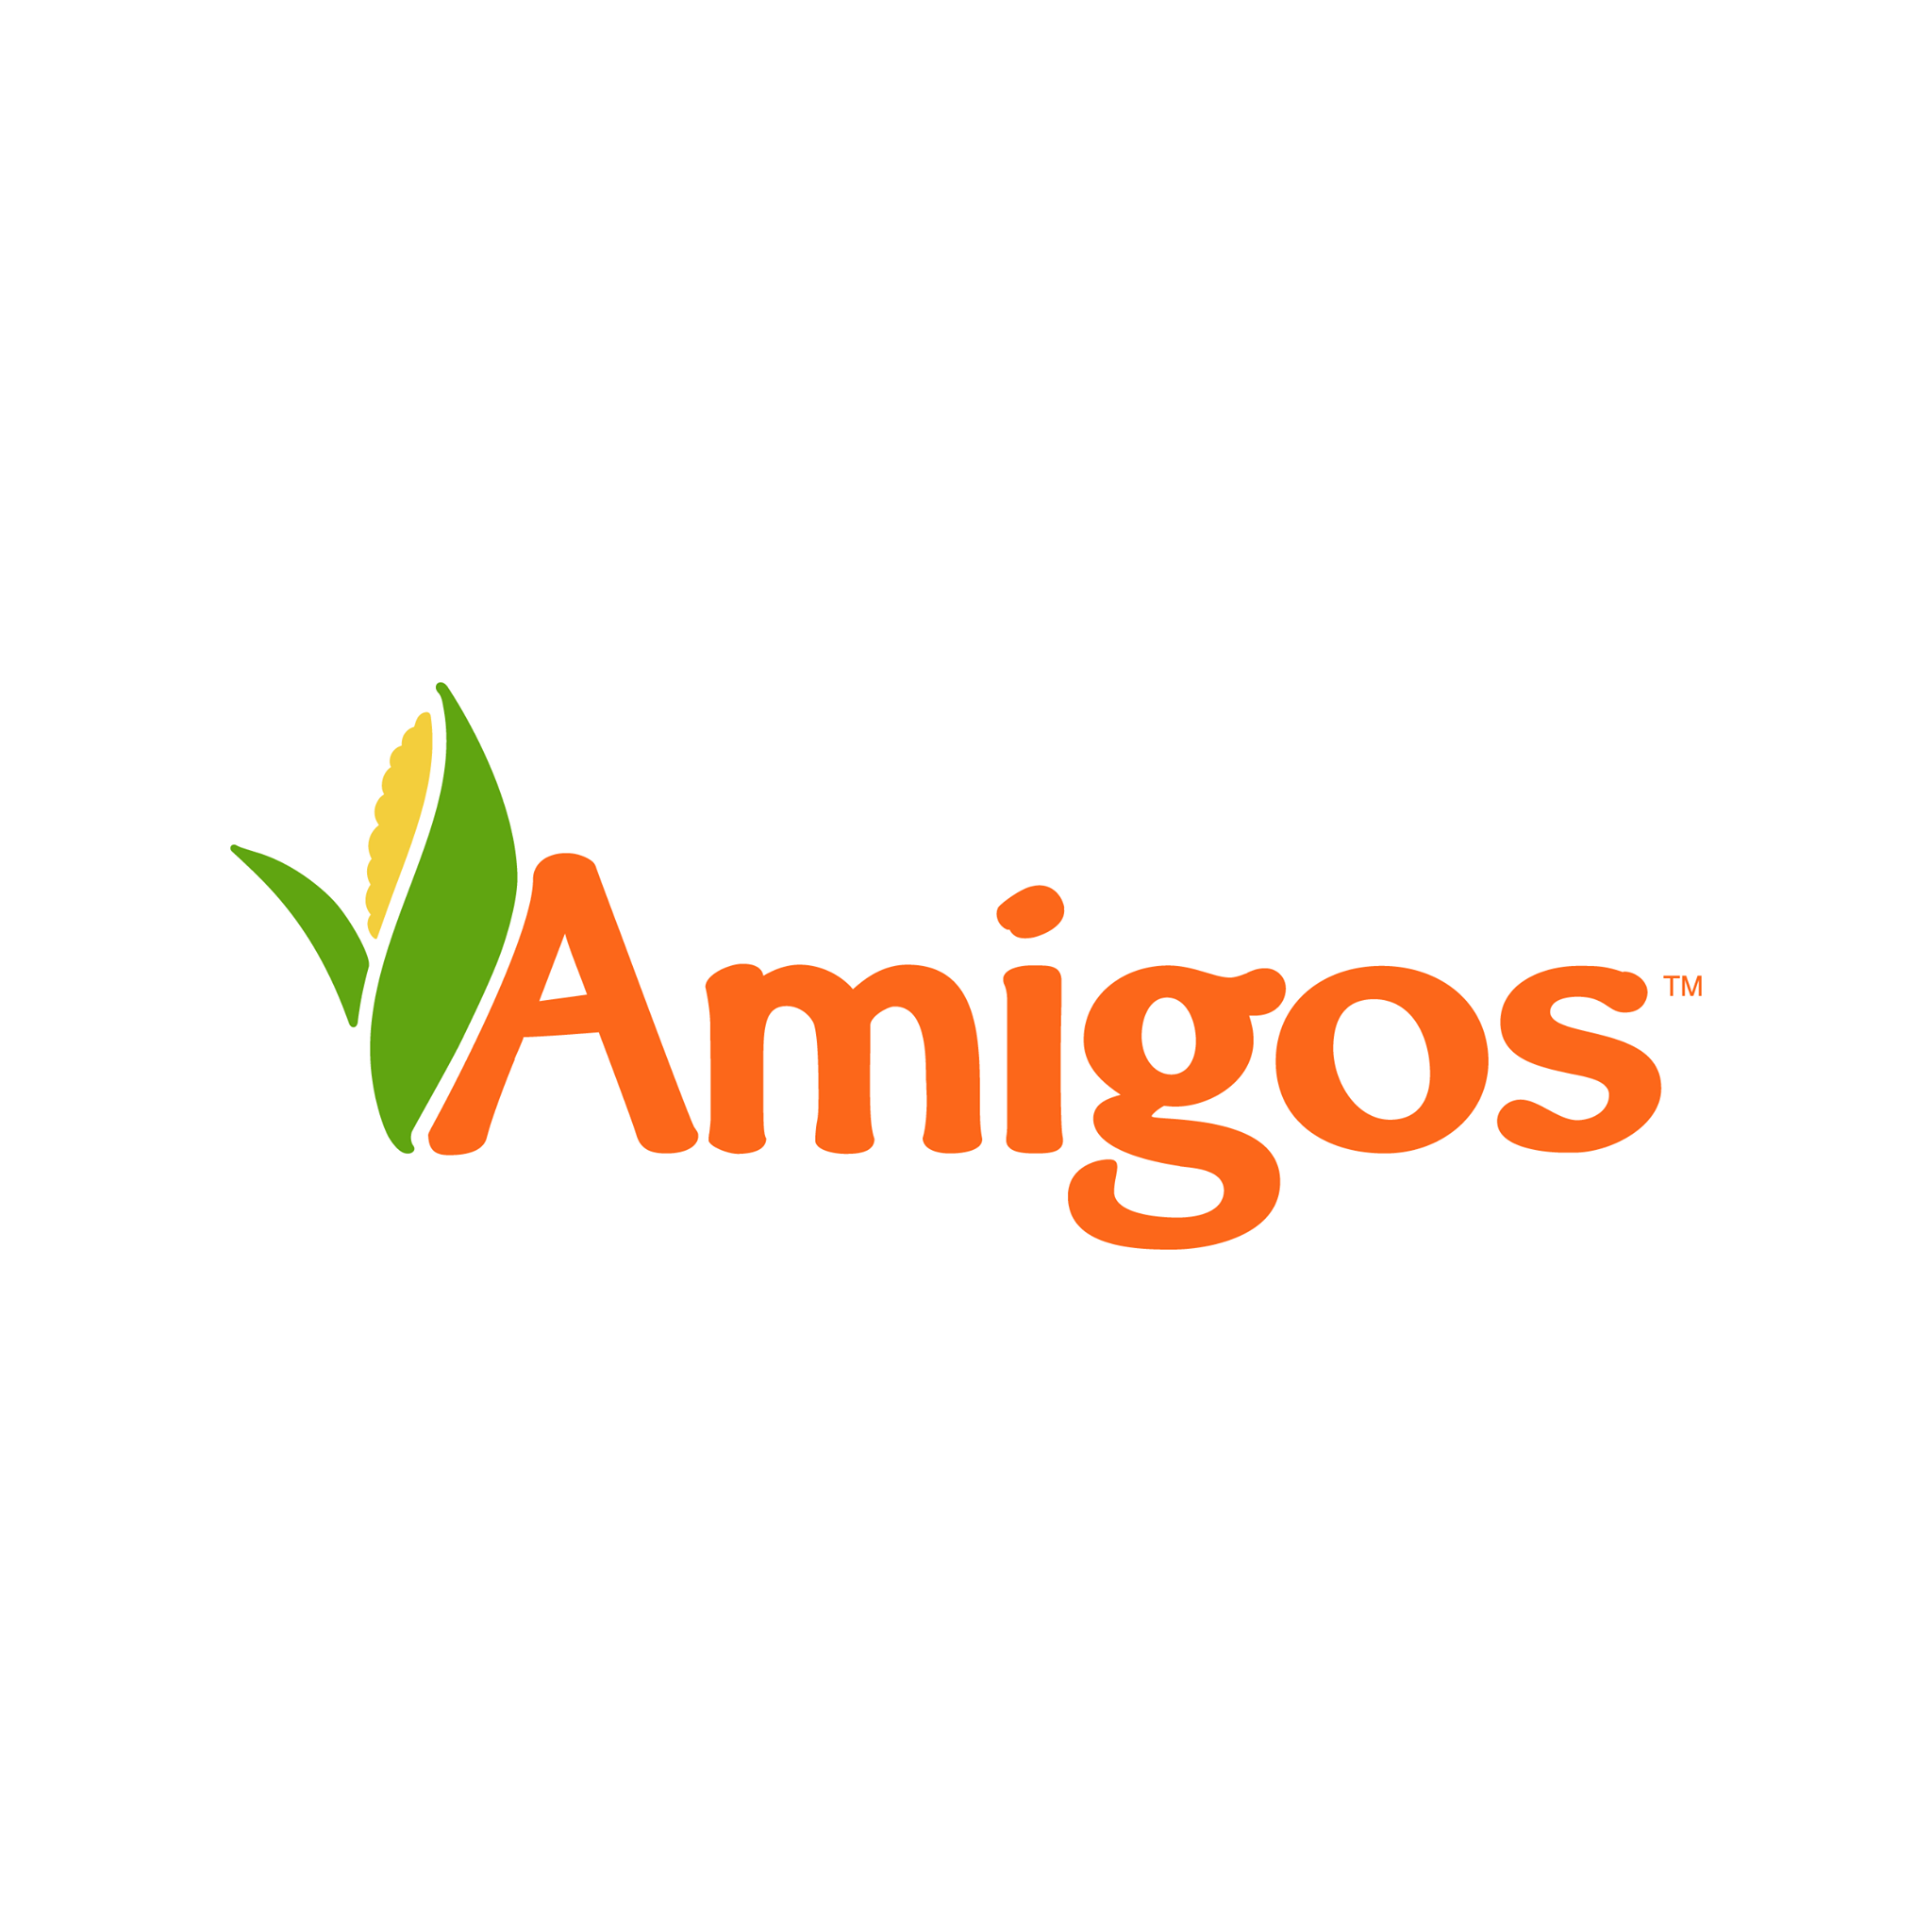 Company logo of Amigos